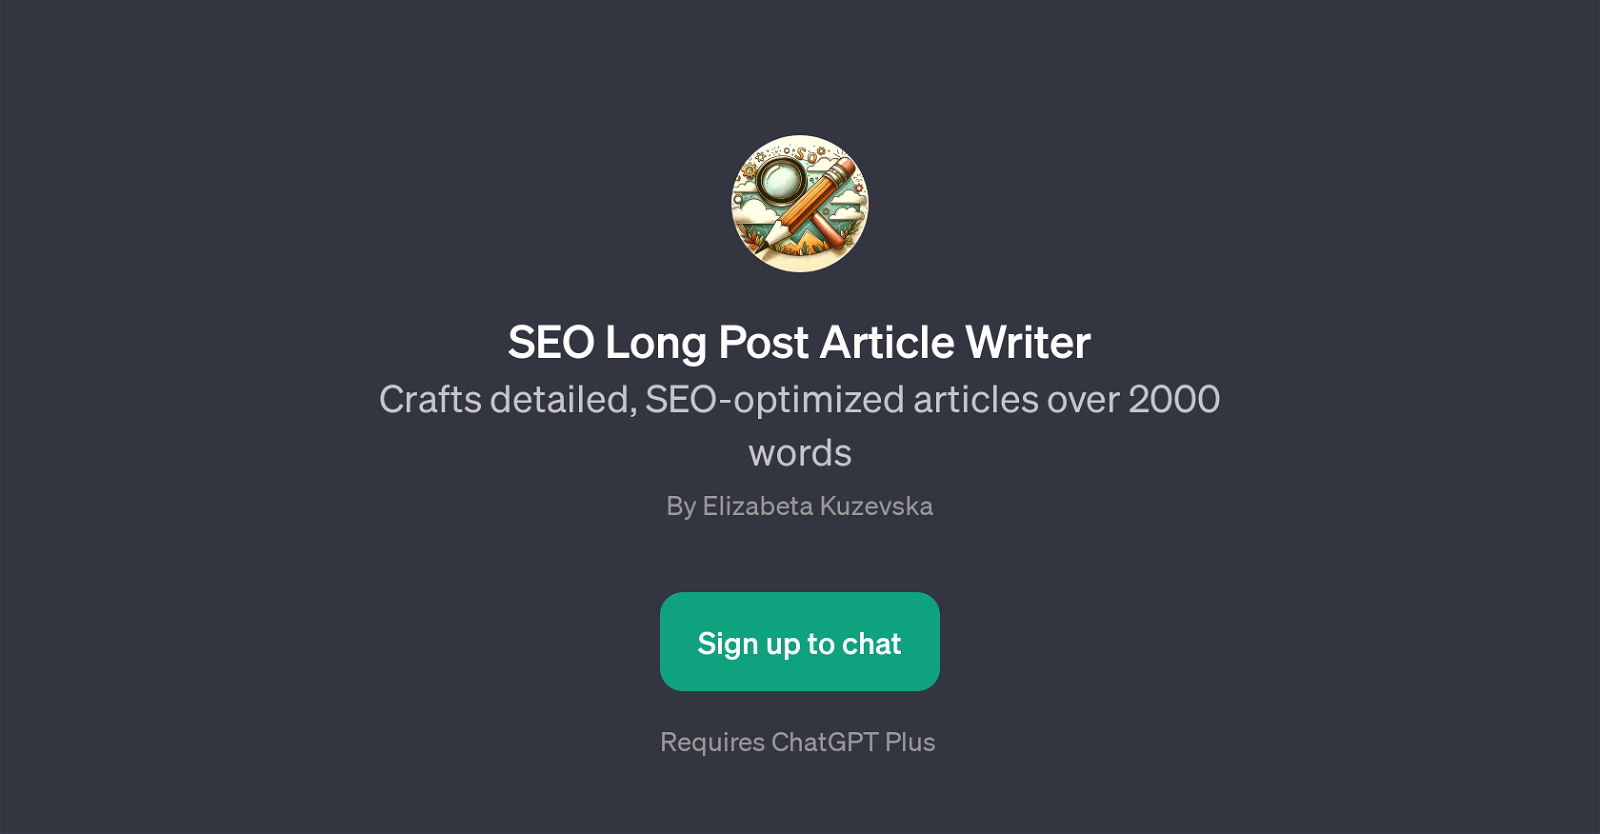 SEO Long Post Article Writer website